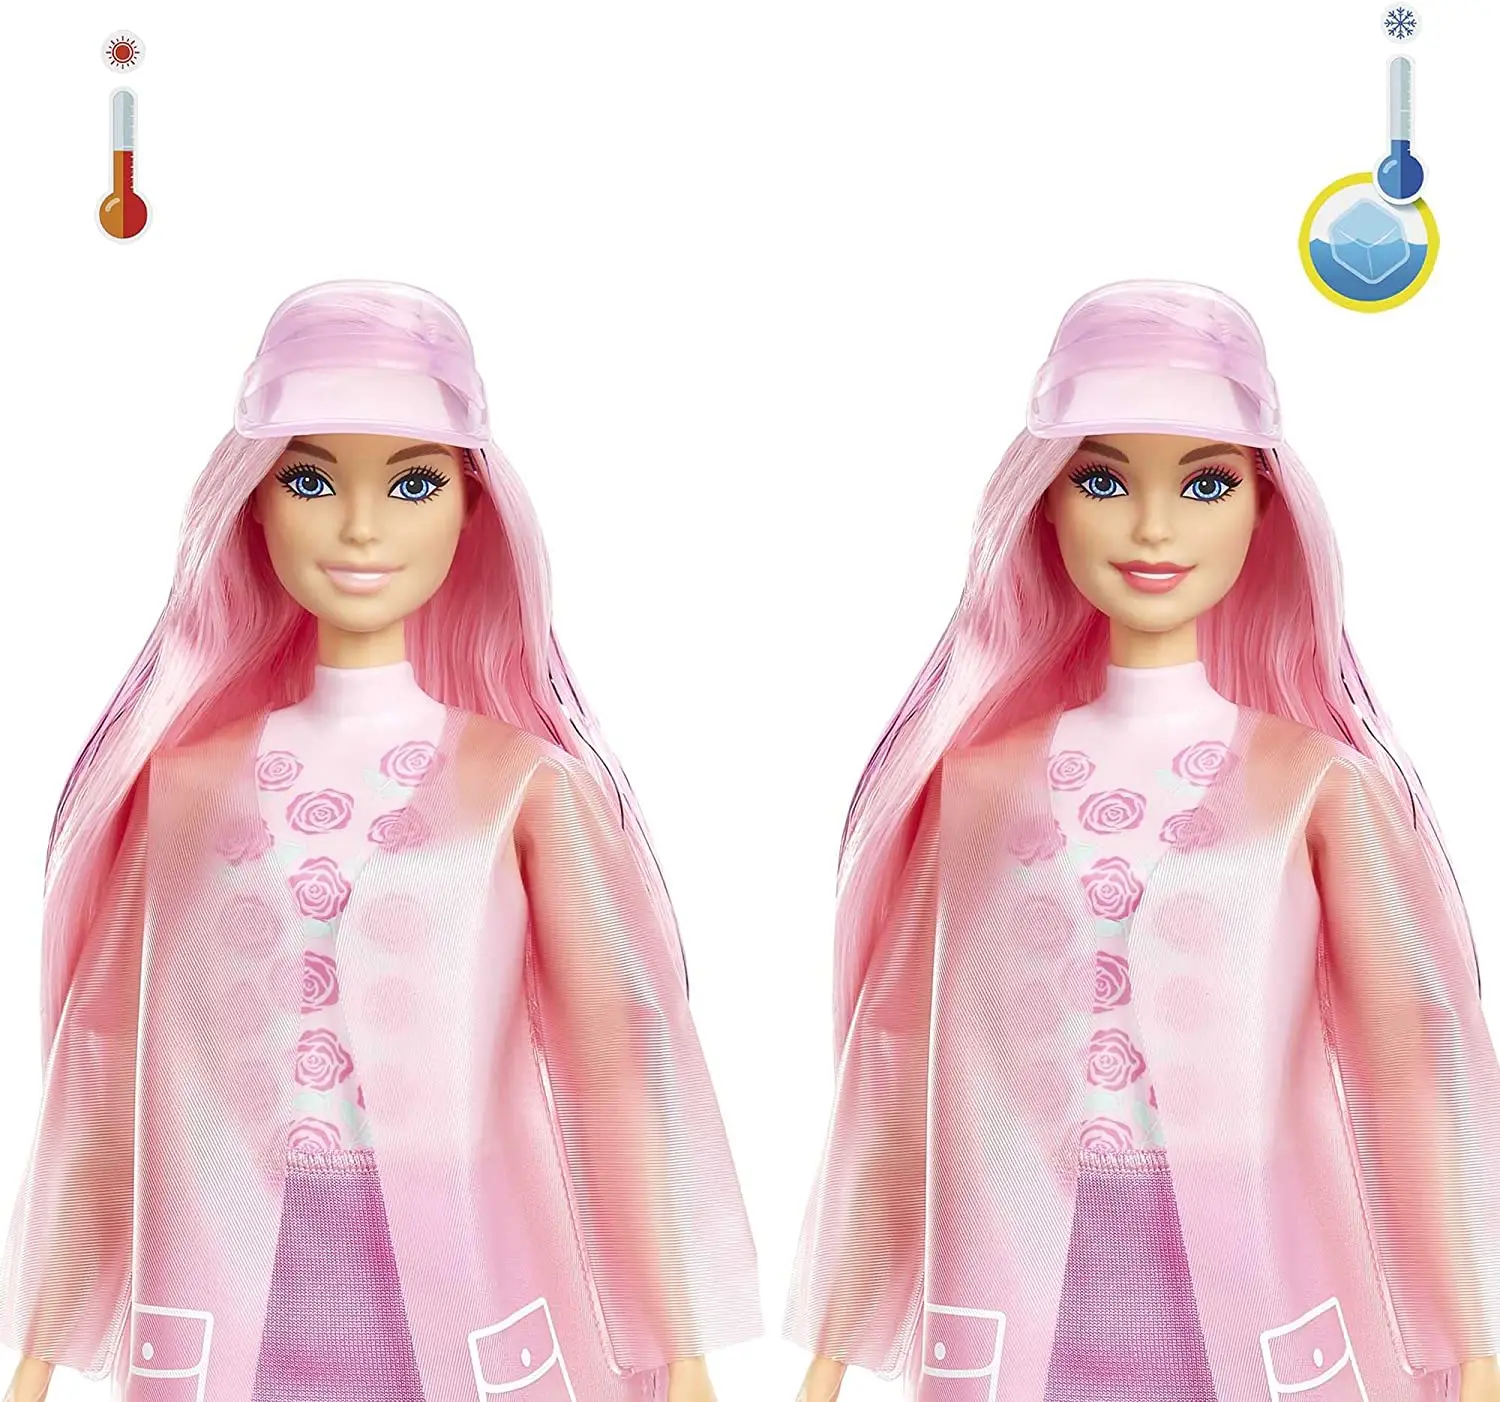 Original Barbie Color Reveal Mermaid Dolls Surprise Rainbow